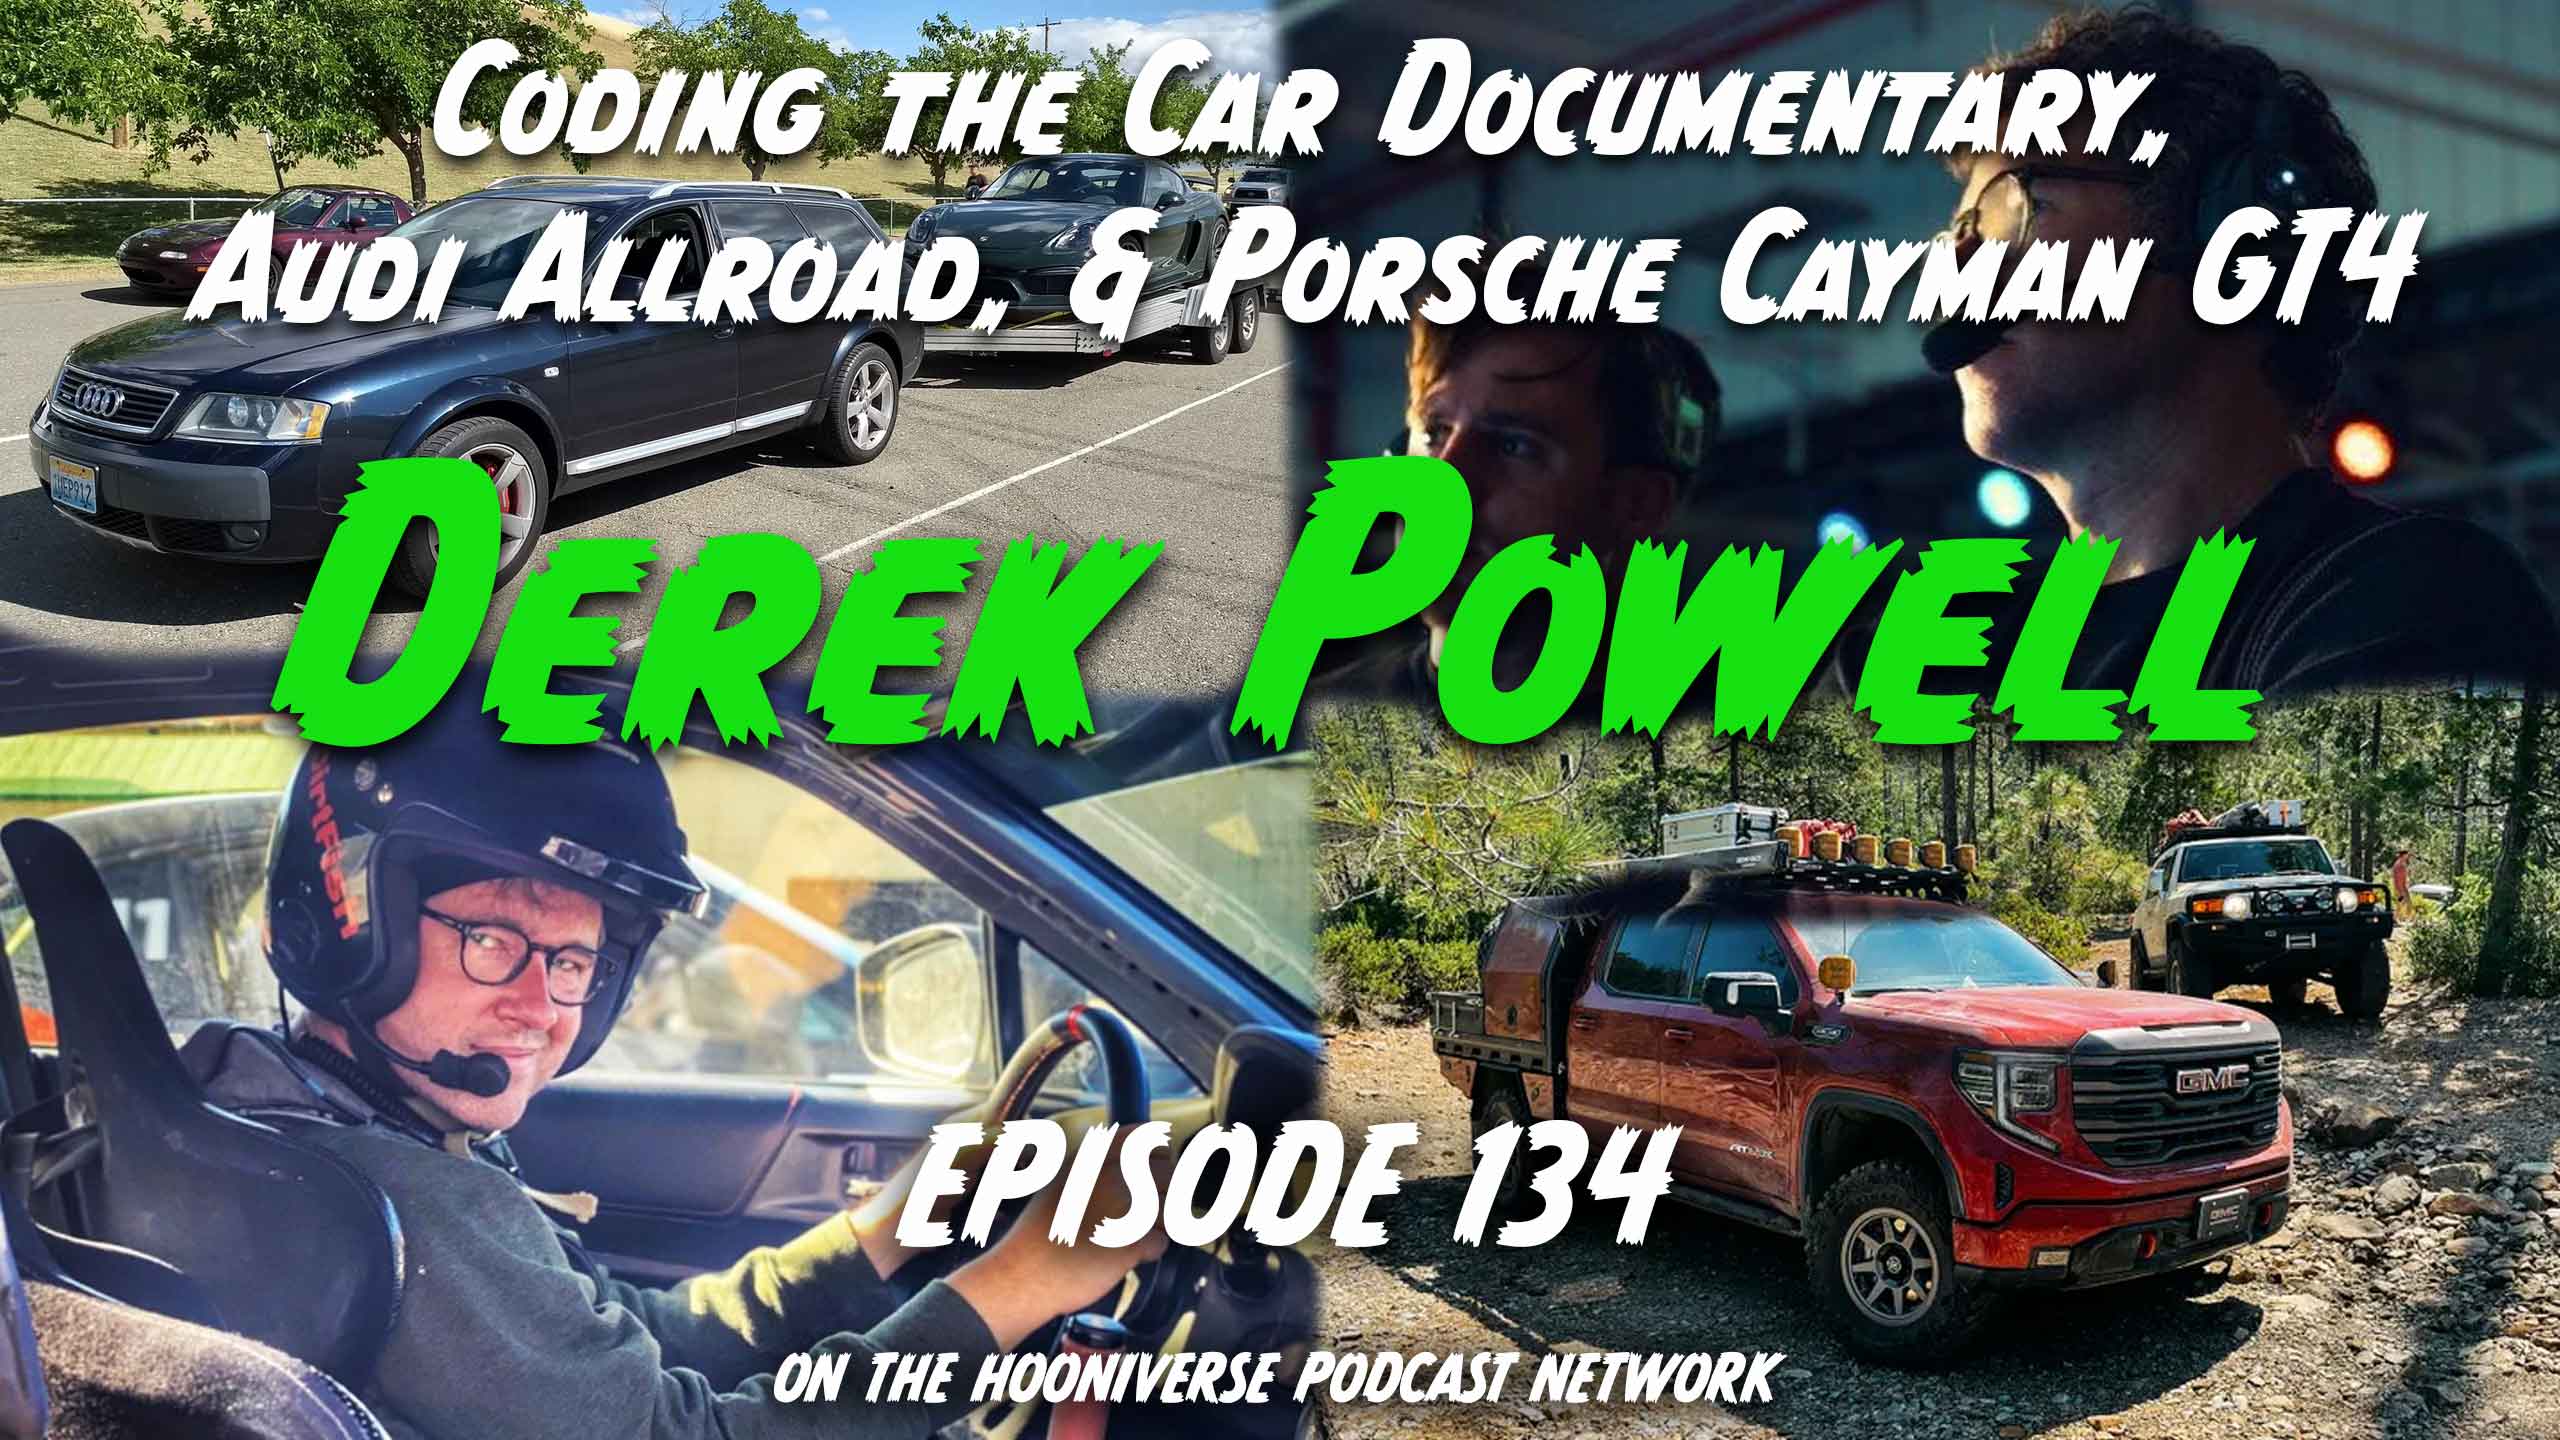 Derek-Powel-Coding-the-Car-Off-the-Road-Again-Podcast-Episode-134